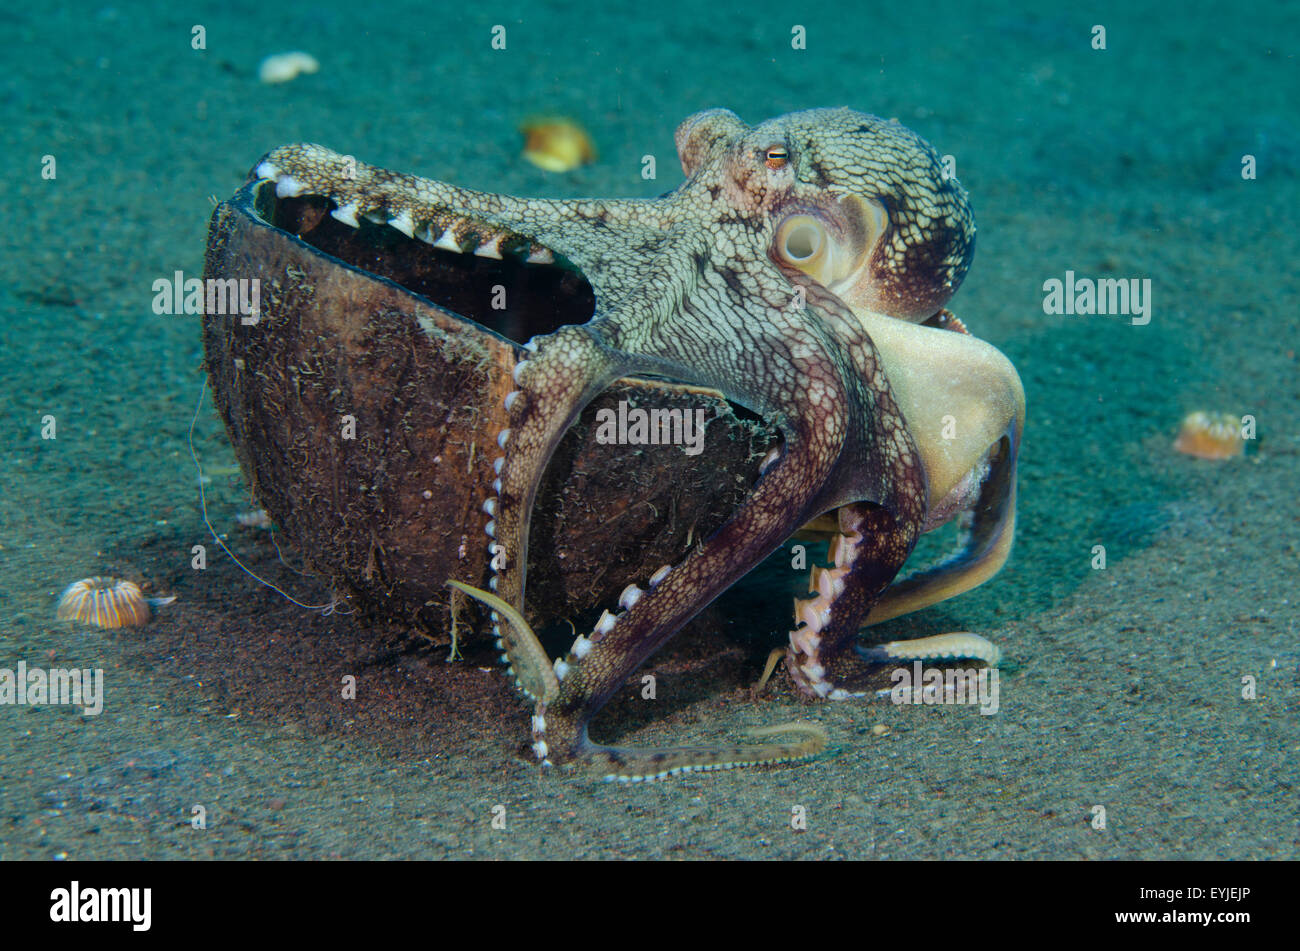 A coconut octopus, Amphioctopus marginatus, hanging onto its coconut shell home, Puri Jati, Seririt, North Bali, Indonesia Stock Photo